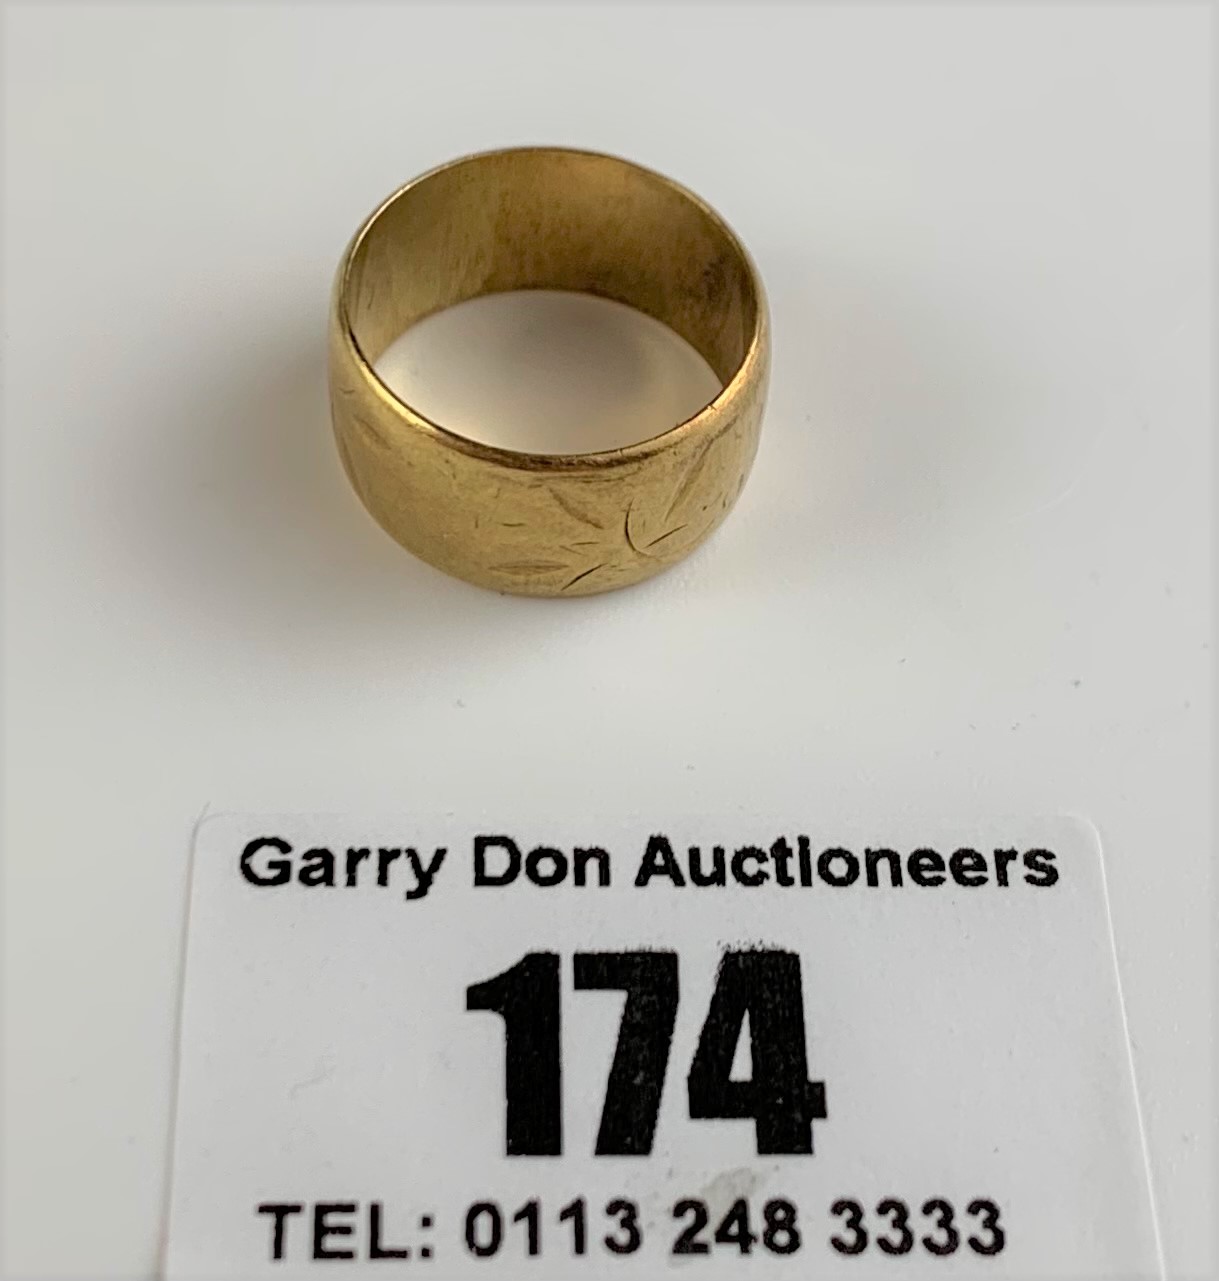 18k gold engraved wedding band, size J, w: 5.5 gms